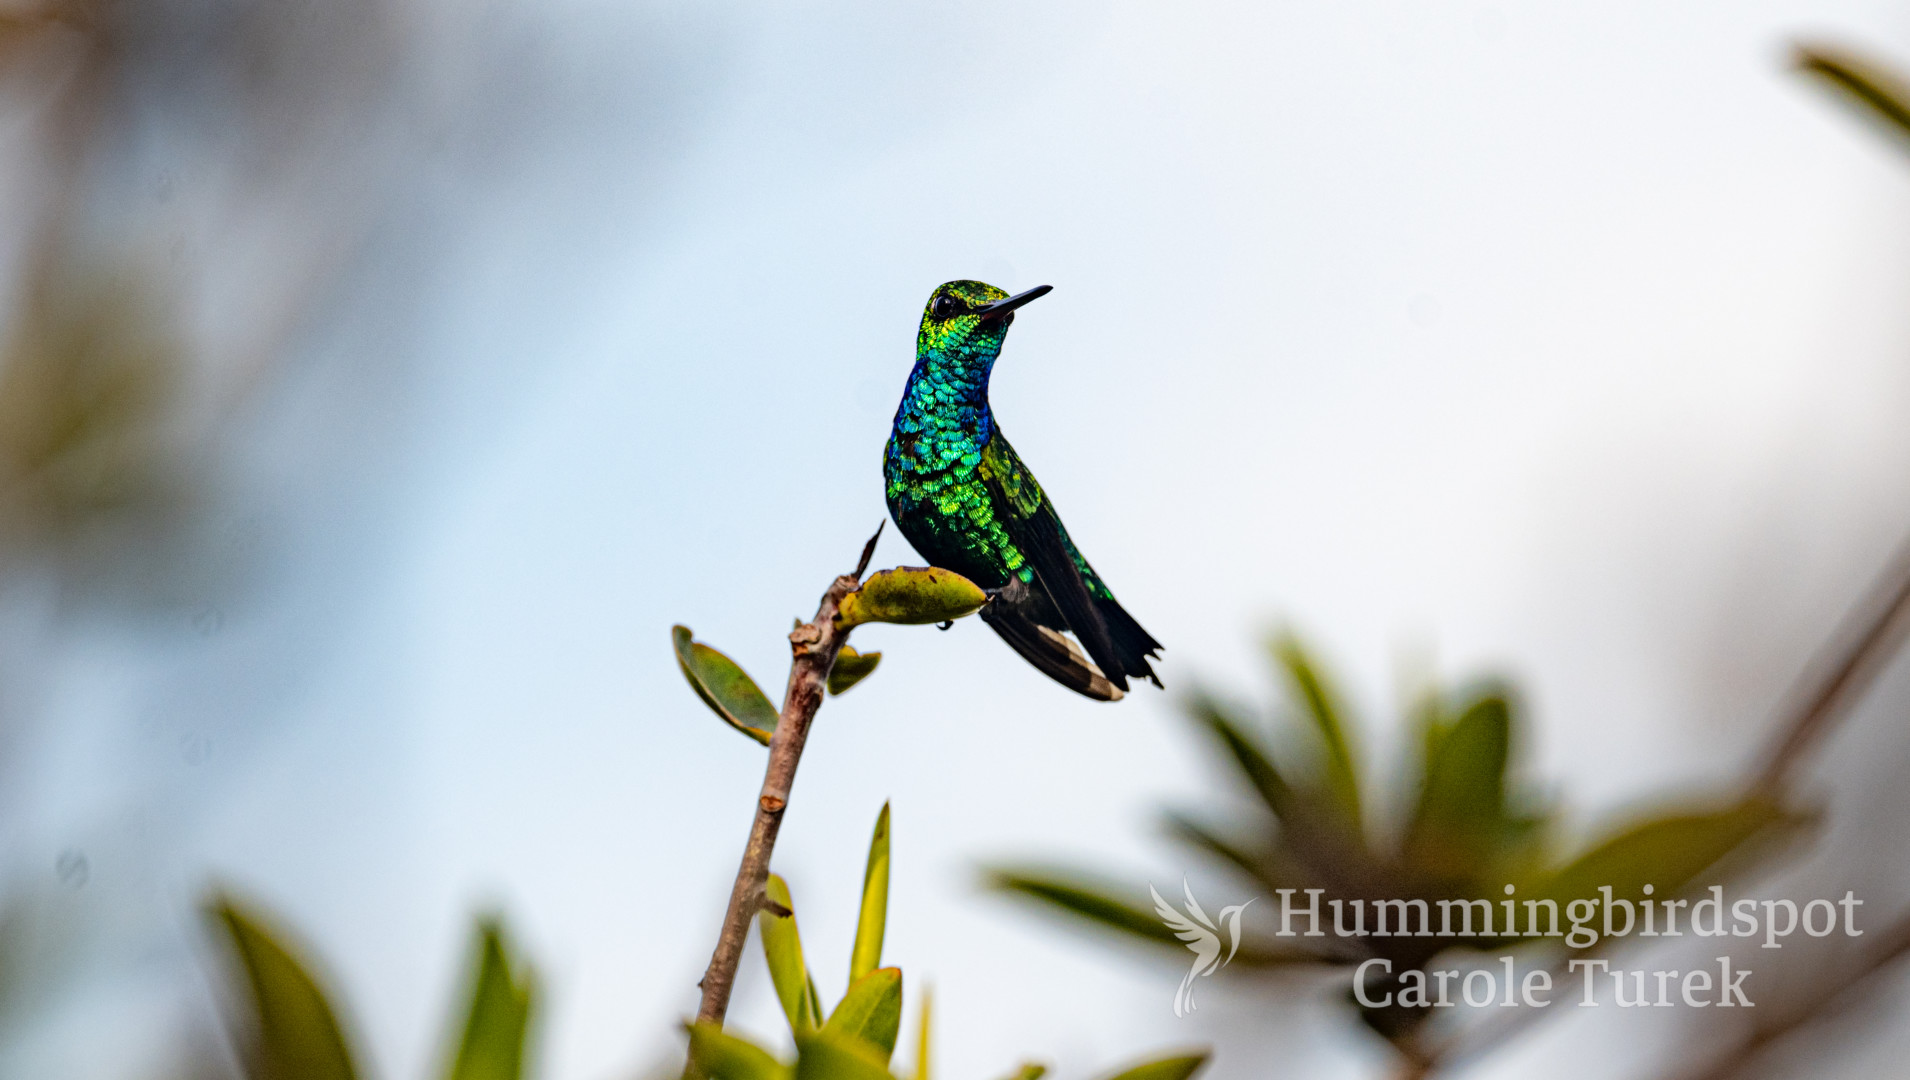 Hummingbird Tours - Expedition Chiribiquete Emerald with Carole Turek